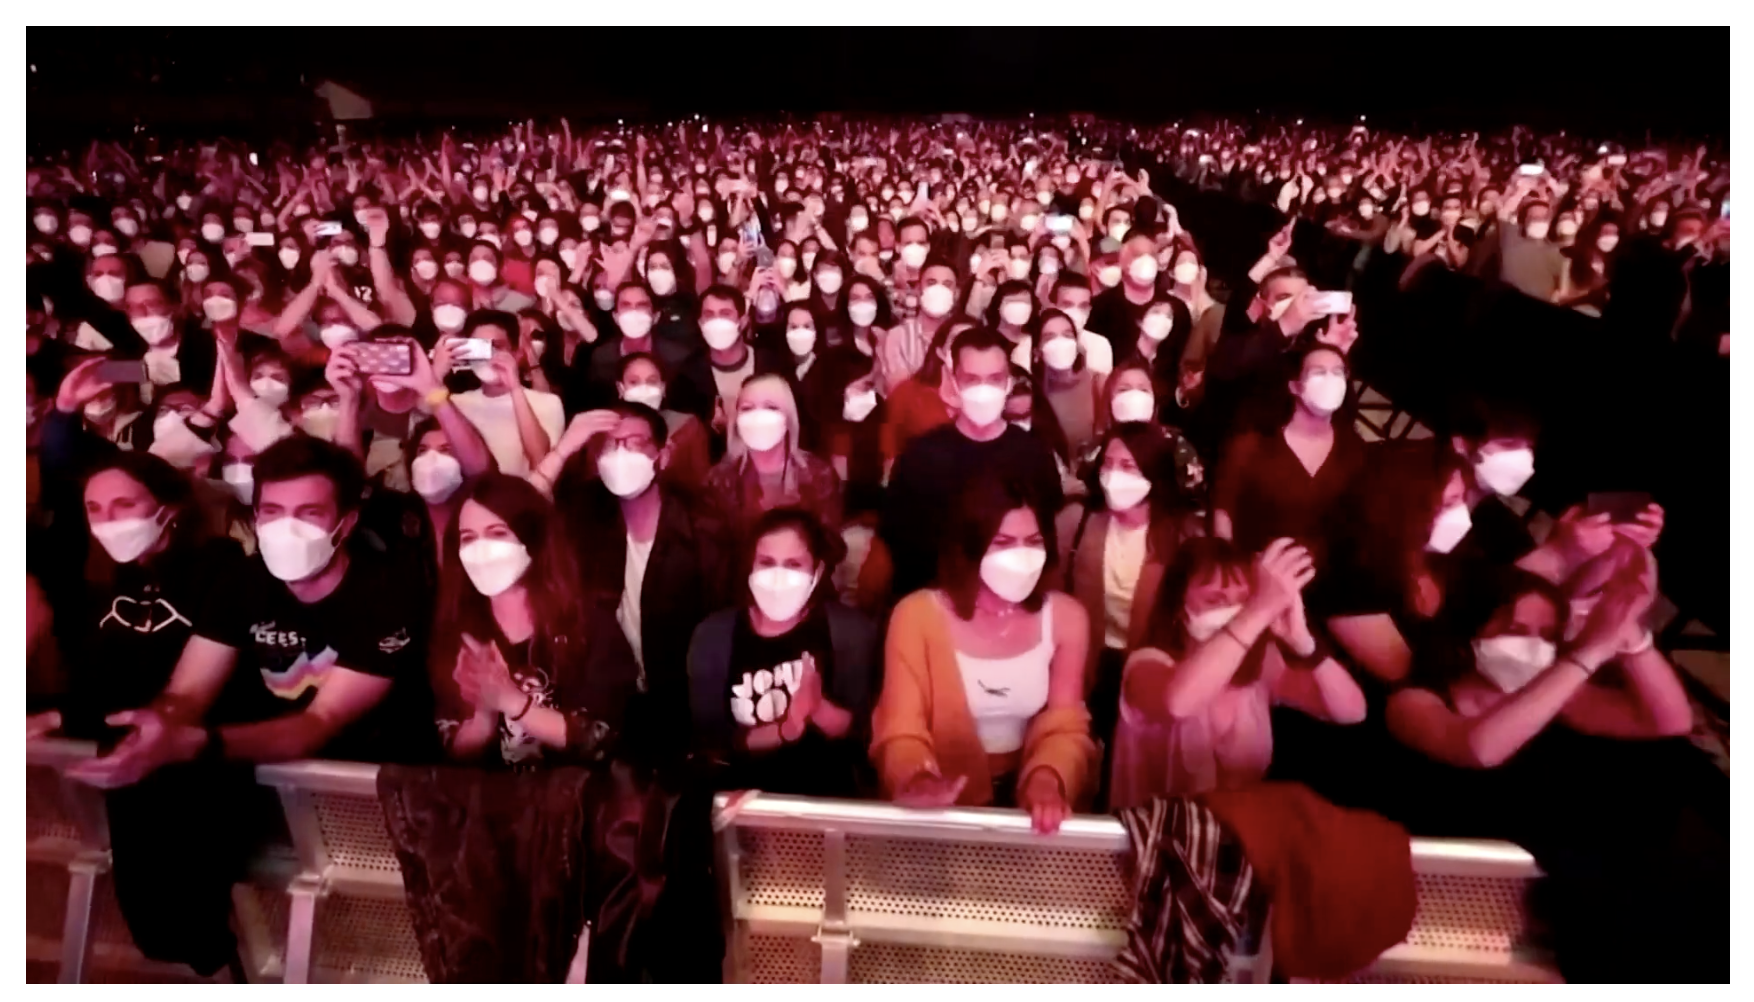 5,000 fans attend Barcelona rock concert after taking rapid coronavirus tests